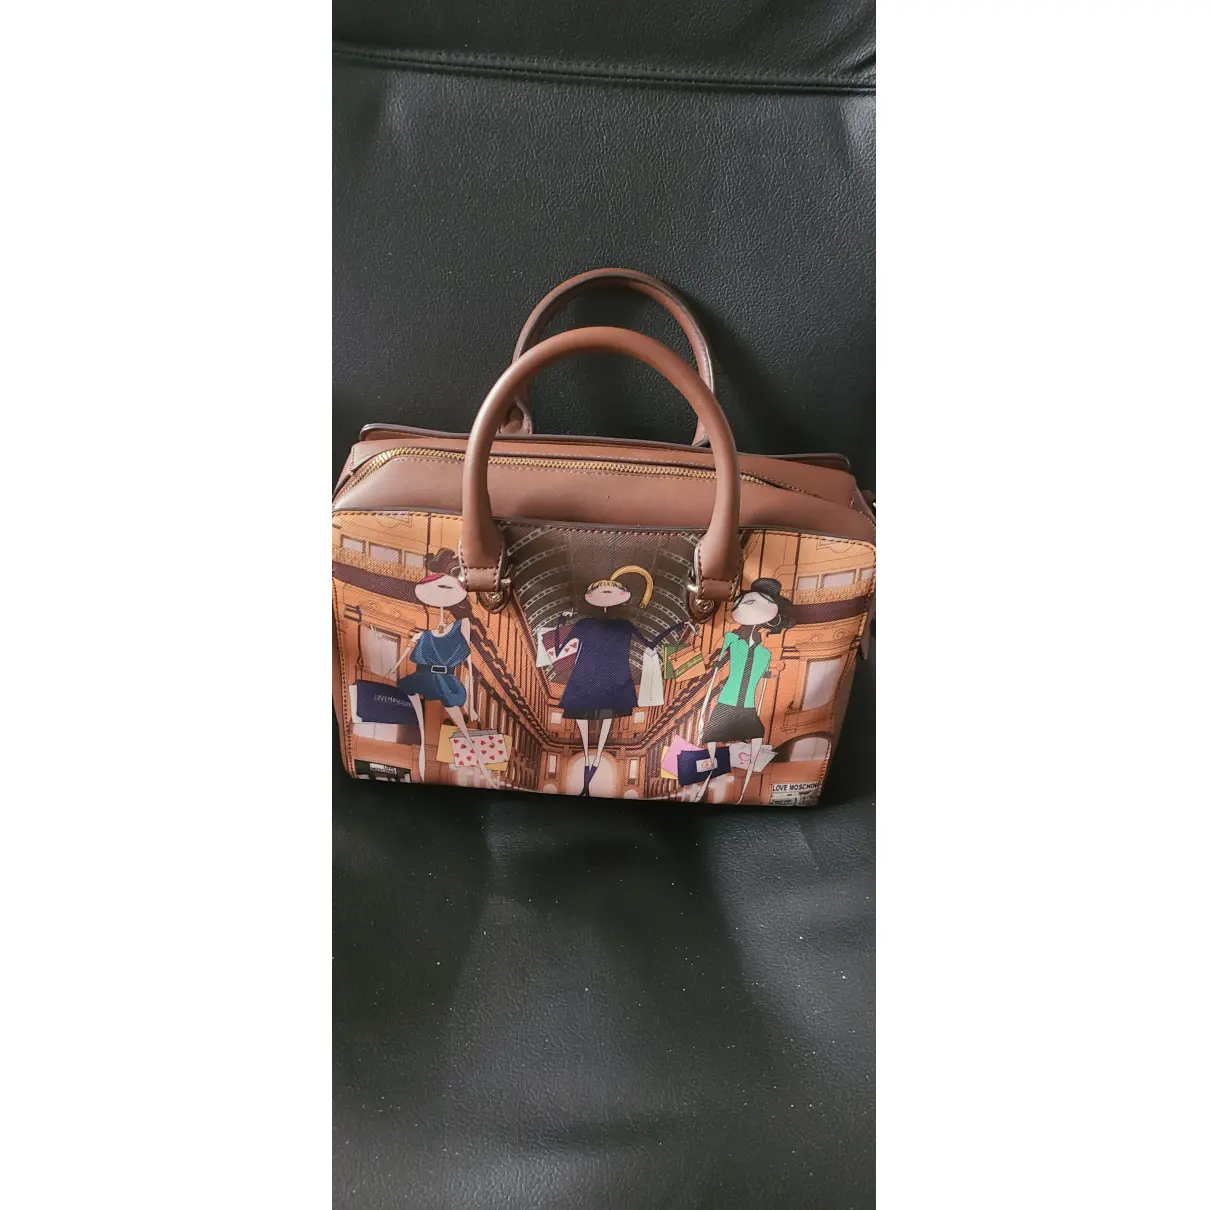 Buy Moschino Love Leather handbag online